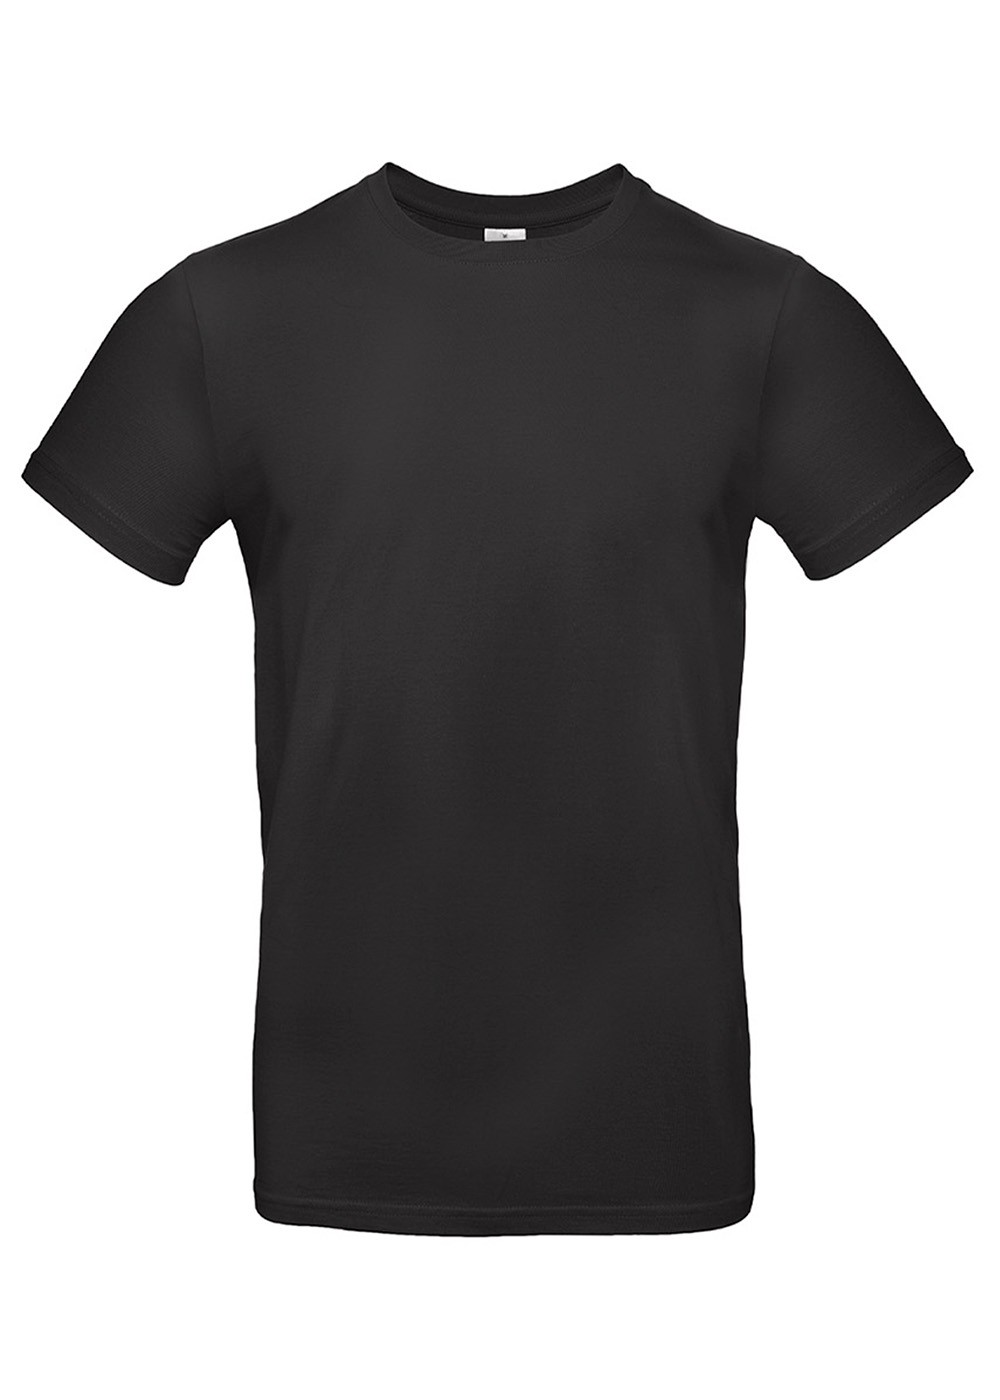 Unisex Fashion T-shirt Black